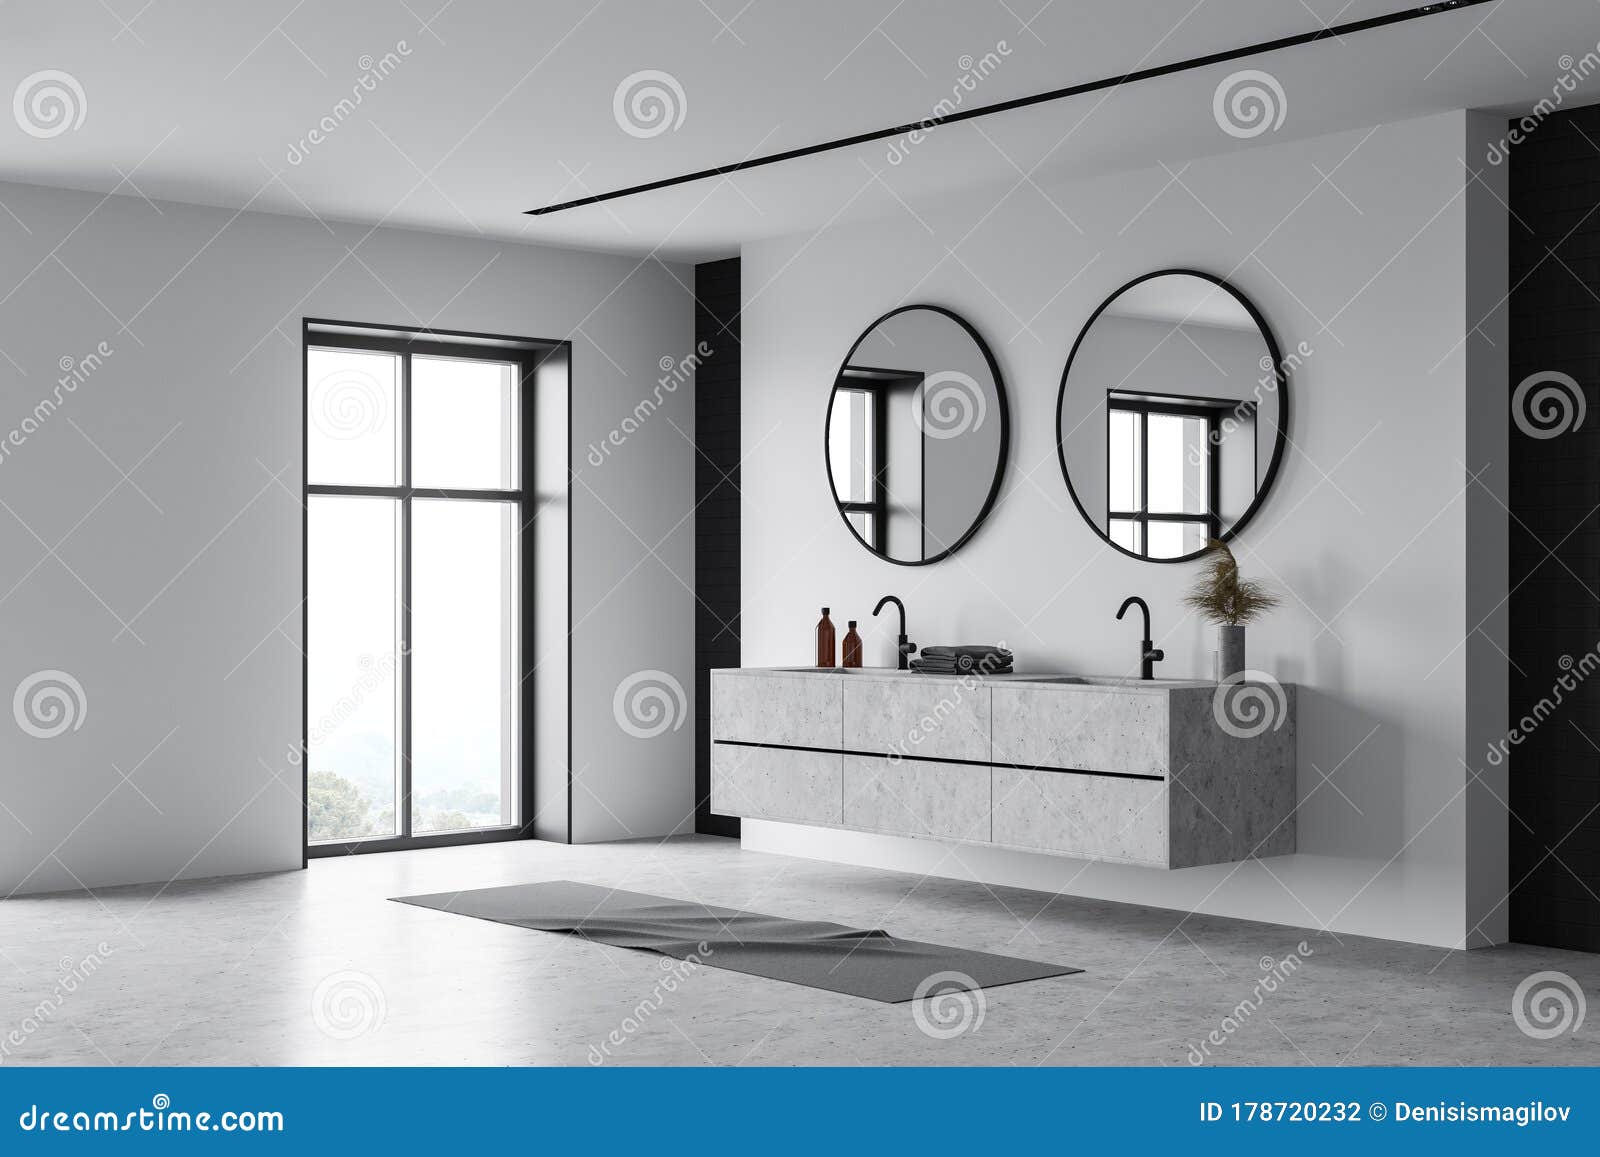 Double Sink In White And Black Bathroom Corner Stock Illustration Illustration Of Floor Inside 178720232